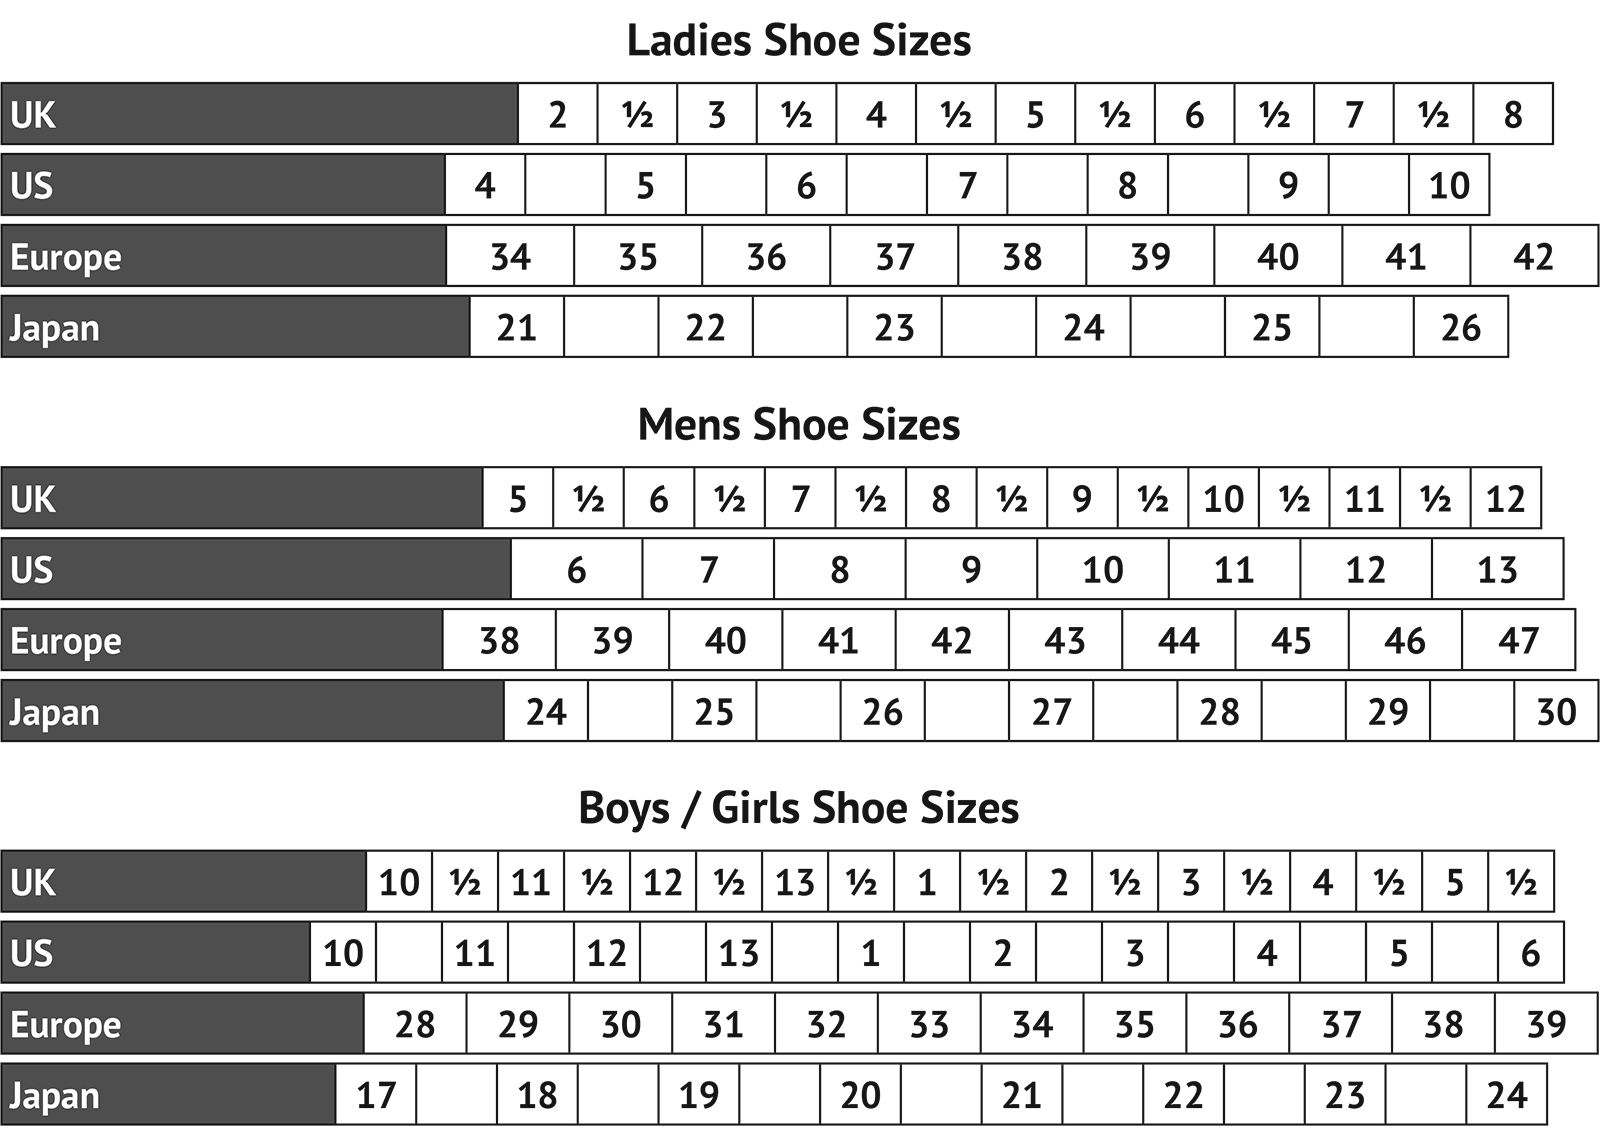 international dance shoes size chart